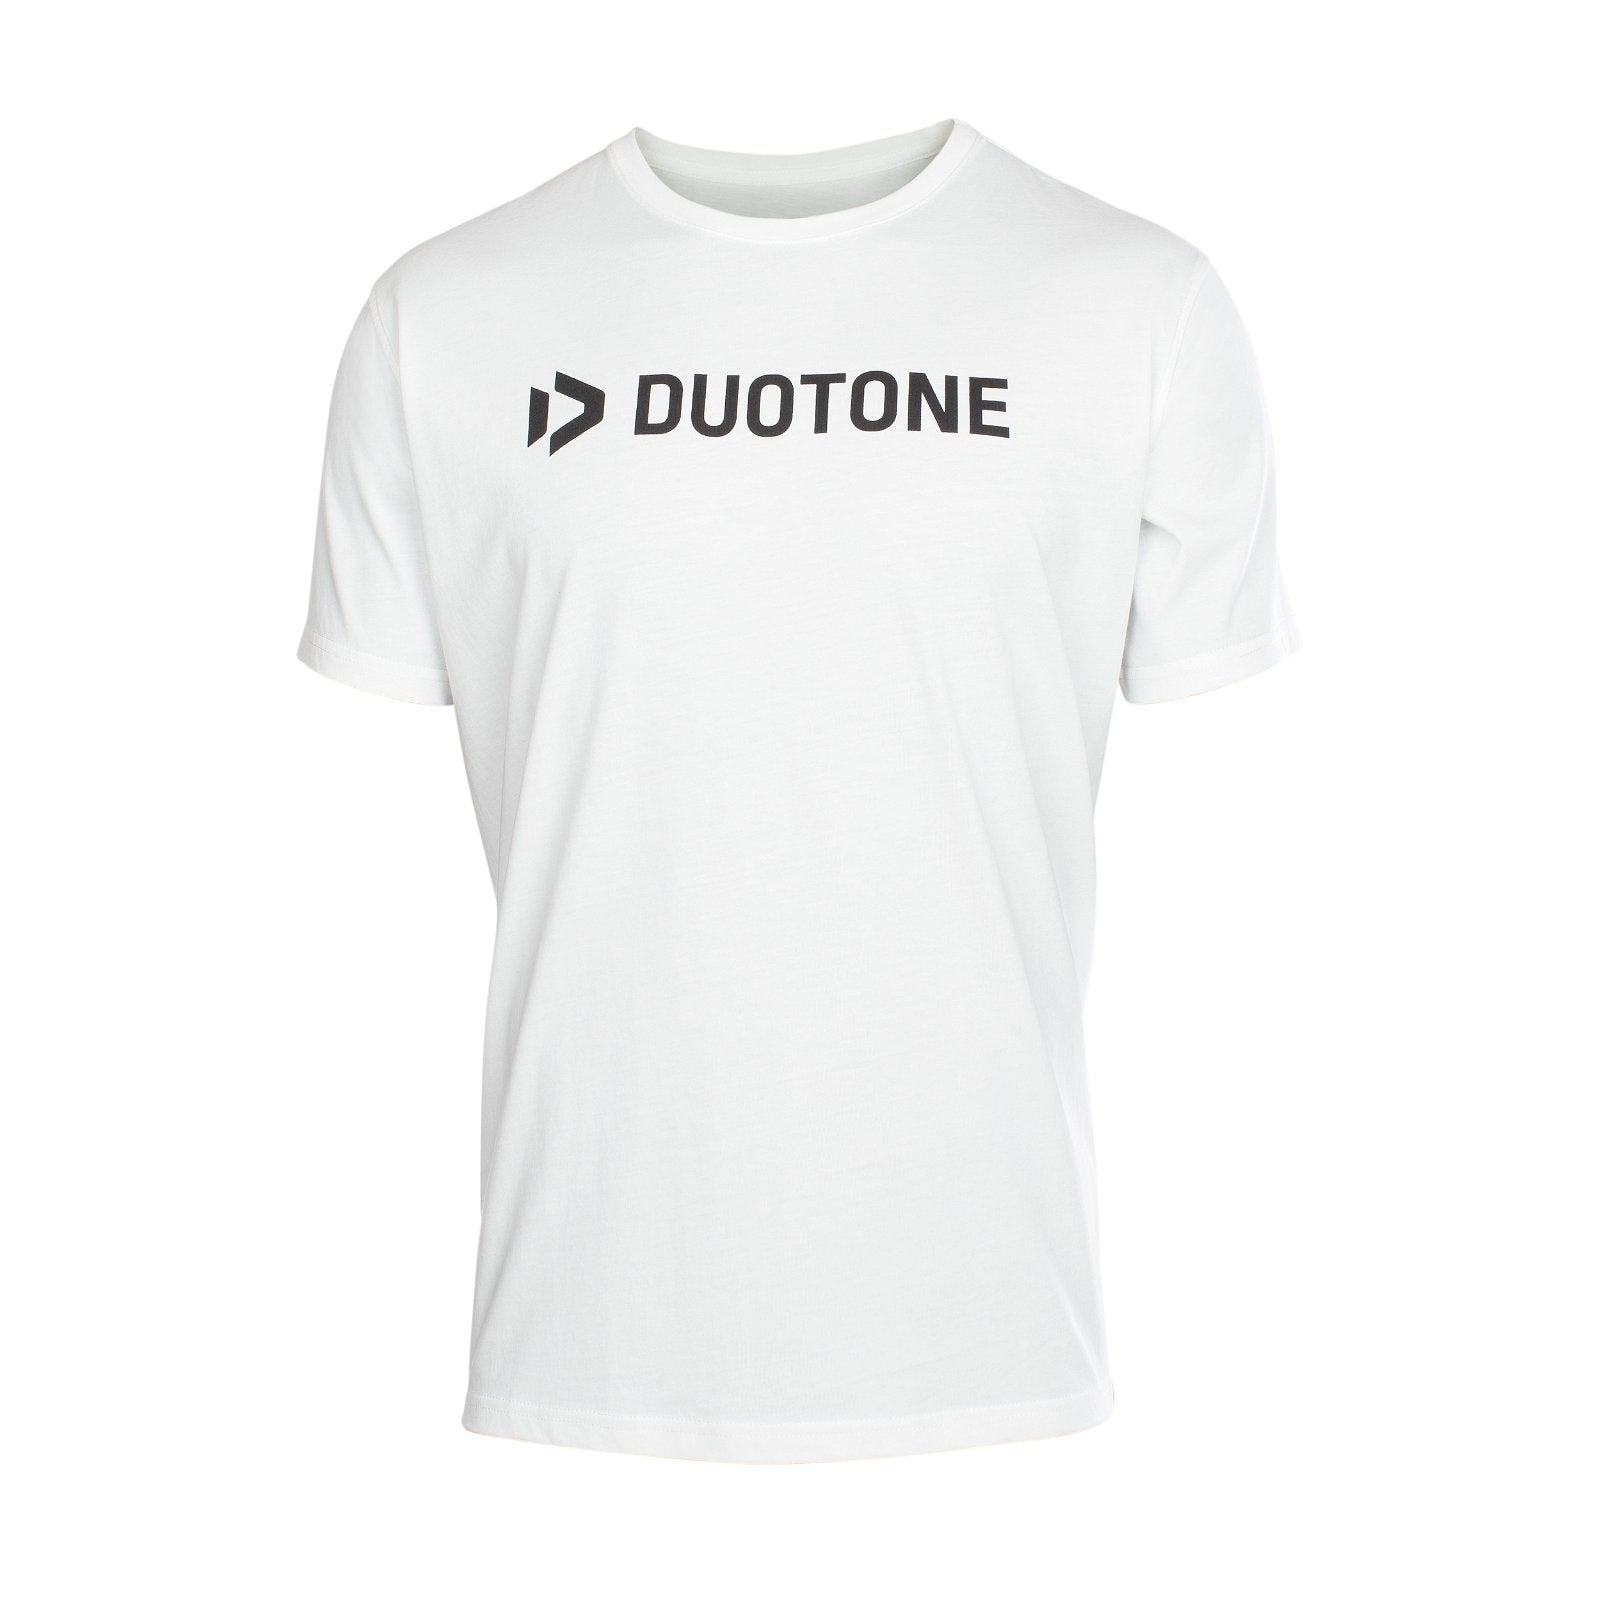 DUOTONE Tee SS Original 2022-Duotone Kiteboarding-L-White-44202-5000-9008415911271-Surf-store.com